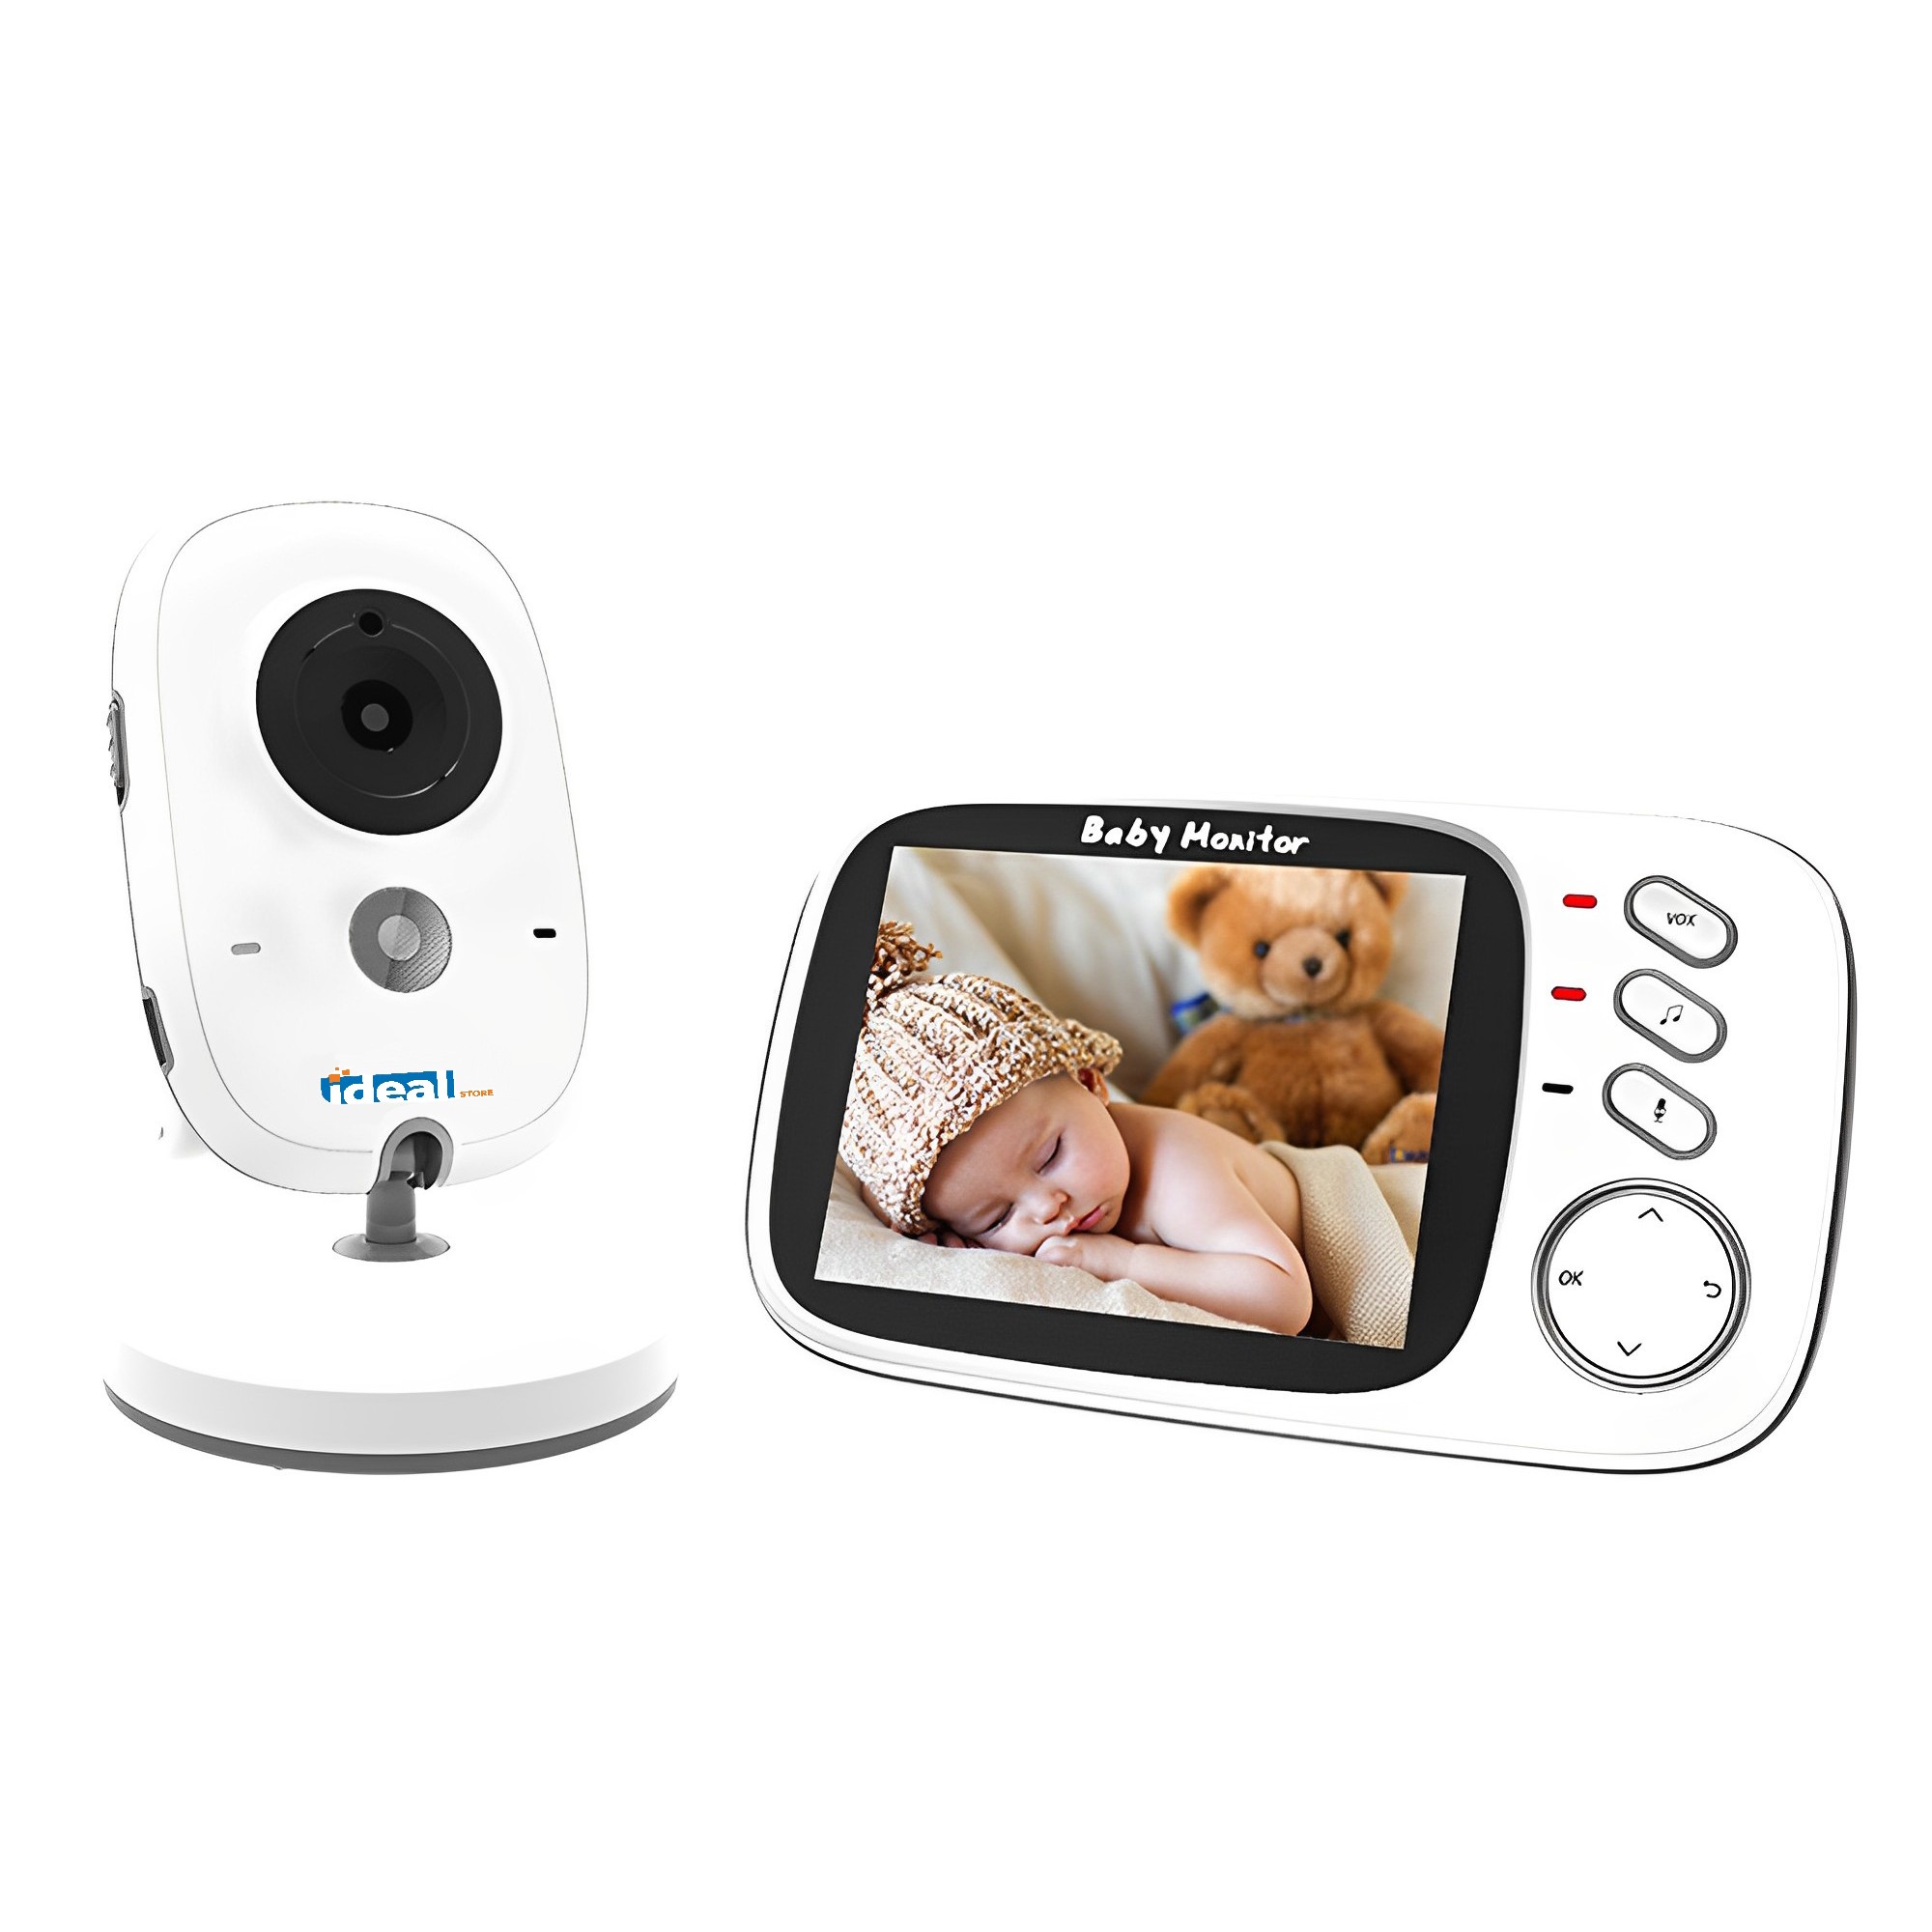 Sistem Monitorizare Video si Audio pentru siguranta bebelusului, Safety Sig63 IdealStore, Conectare Wireless, mod Night Vision, Senzor de Temperatura, Dimensiune ecran 3.2 inch, Alerta la miscare